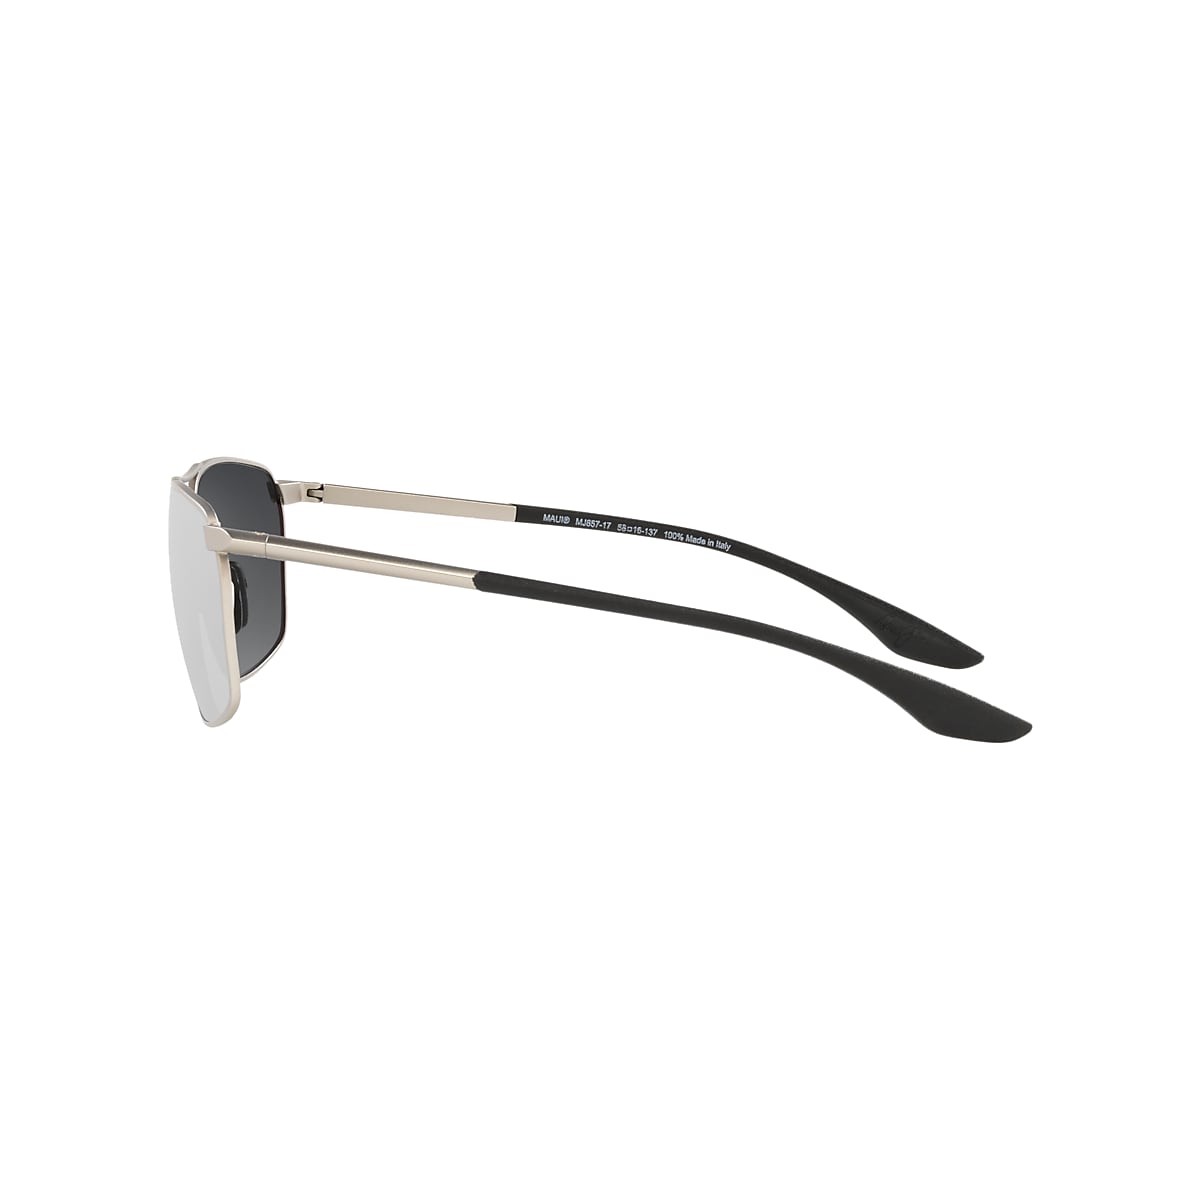 MAUI JIM Puu Kukui Silver - Man Sunglasses, Neutral Grey Polarized Lens